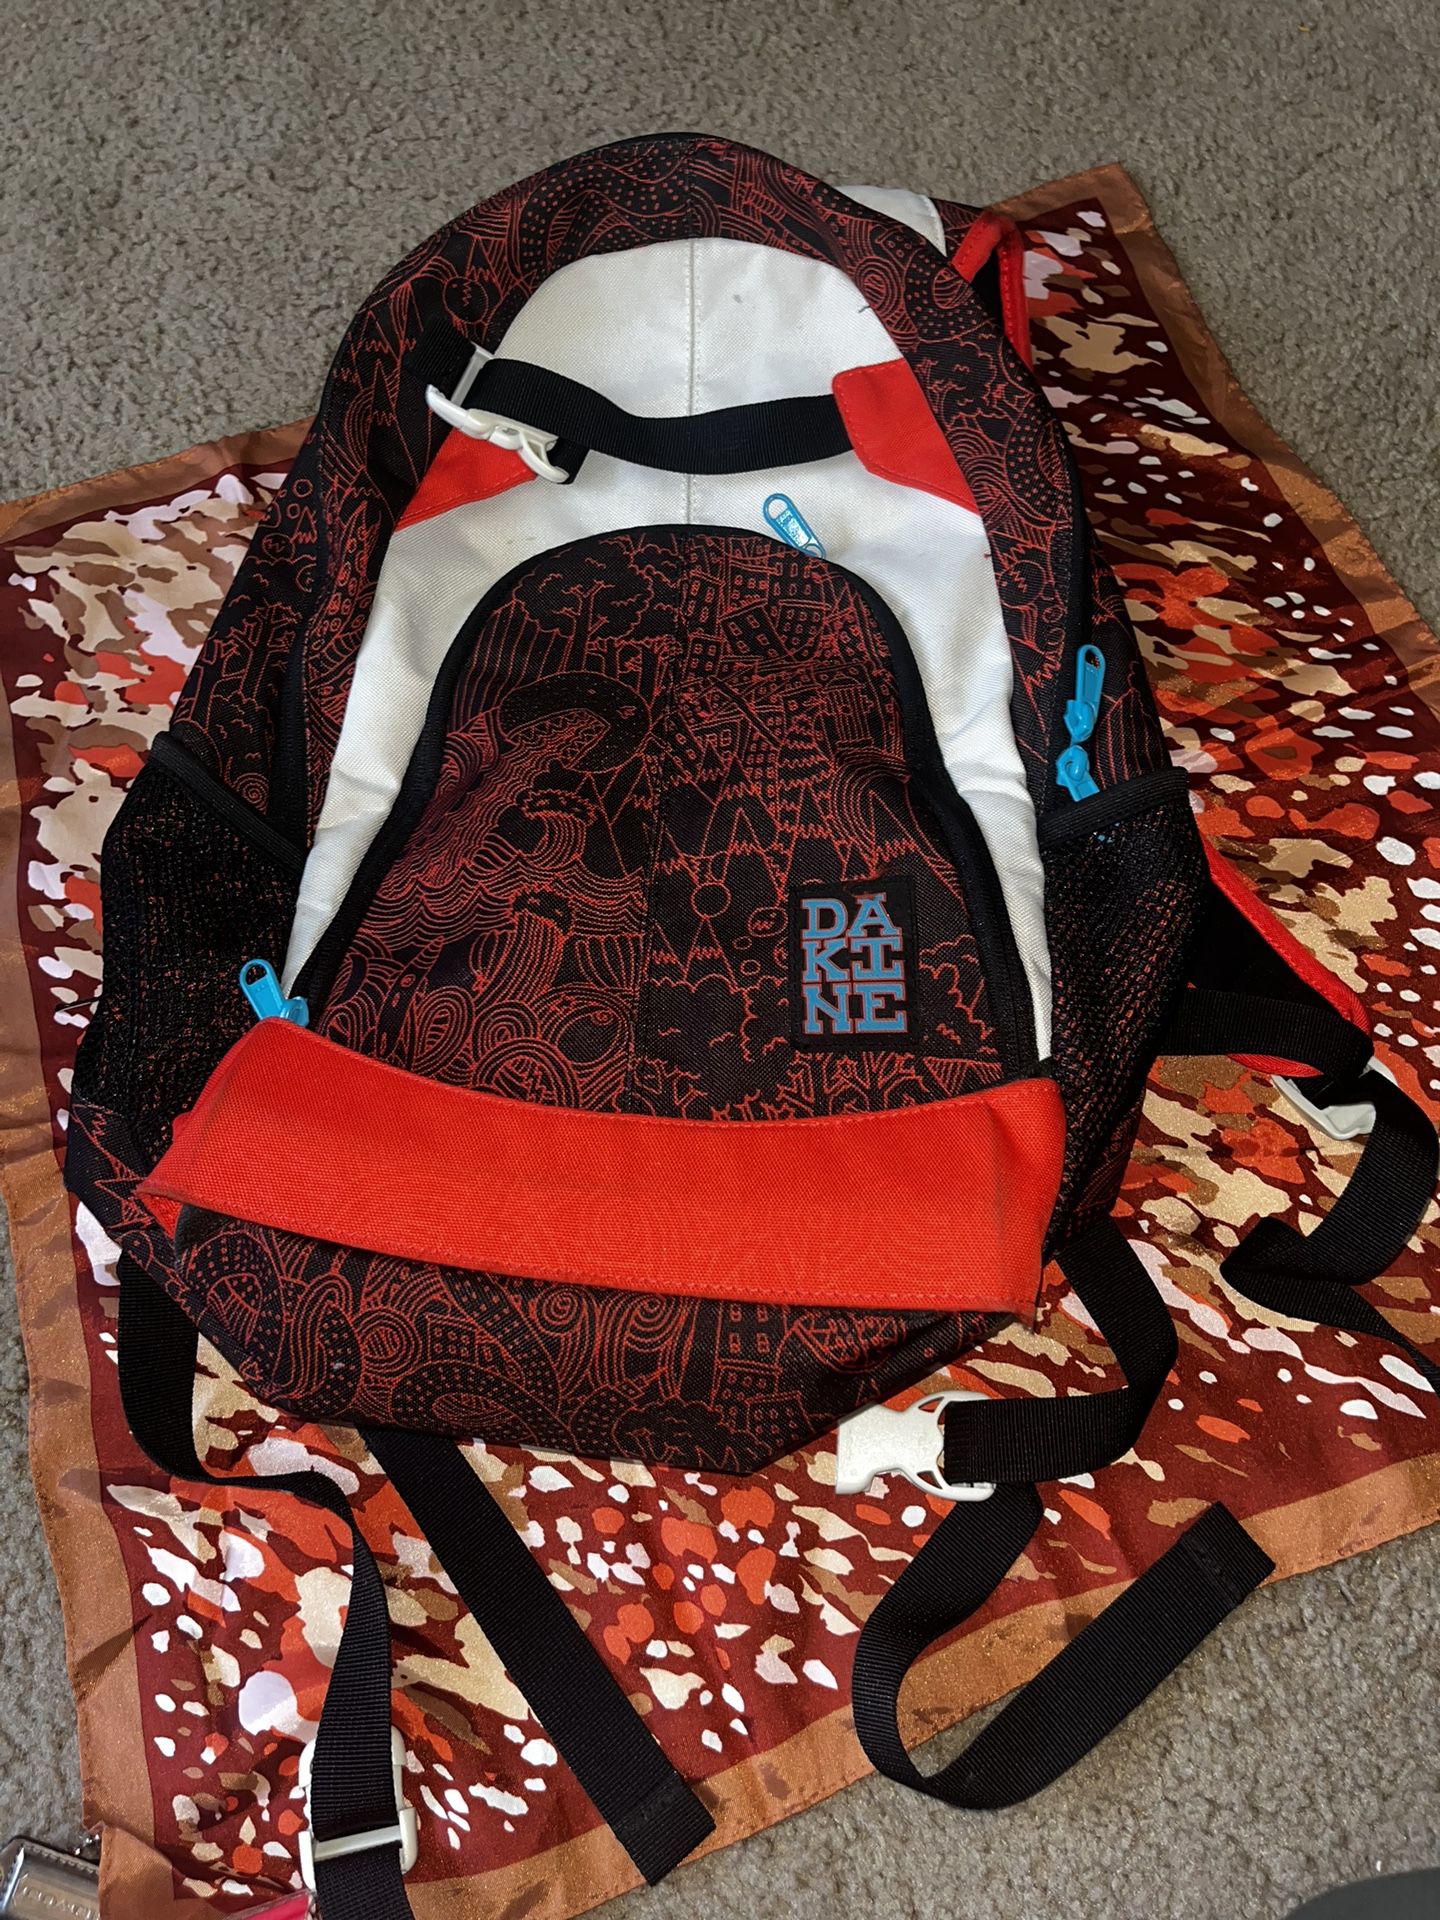 Dakine Backpack $15 Cash Only (Like New)